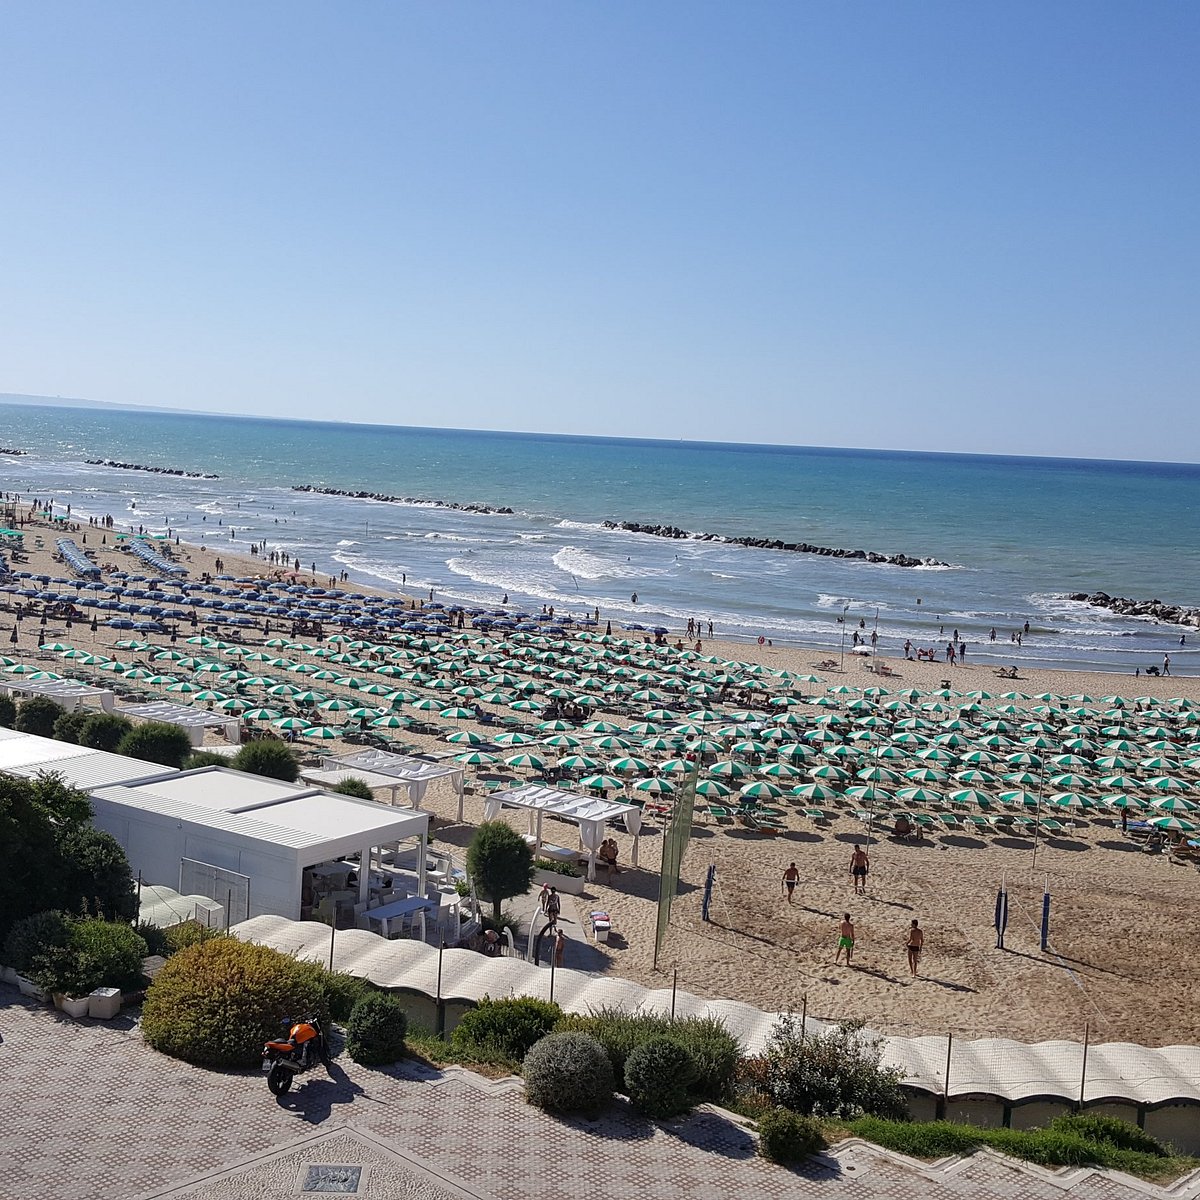 Spiaggia di Sant'Antonio (Termoli) - All You Need to Know BEFORE You Go